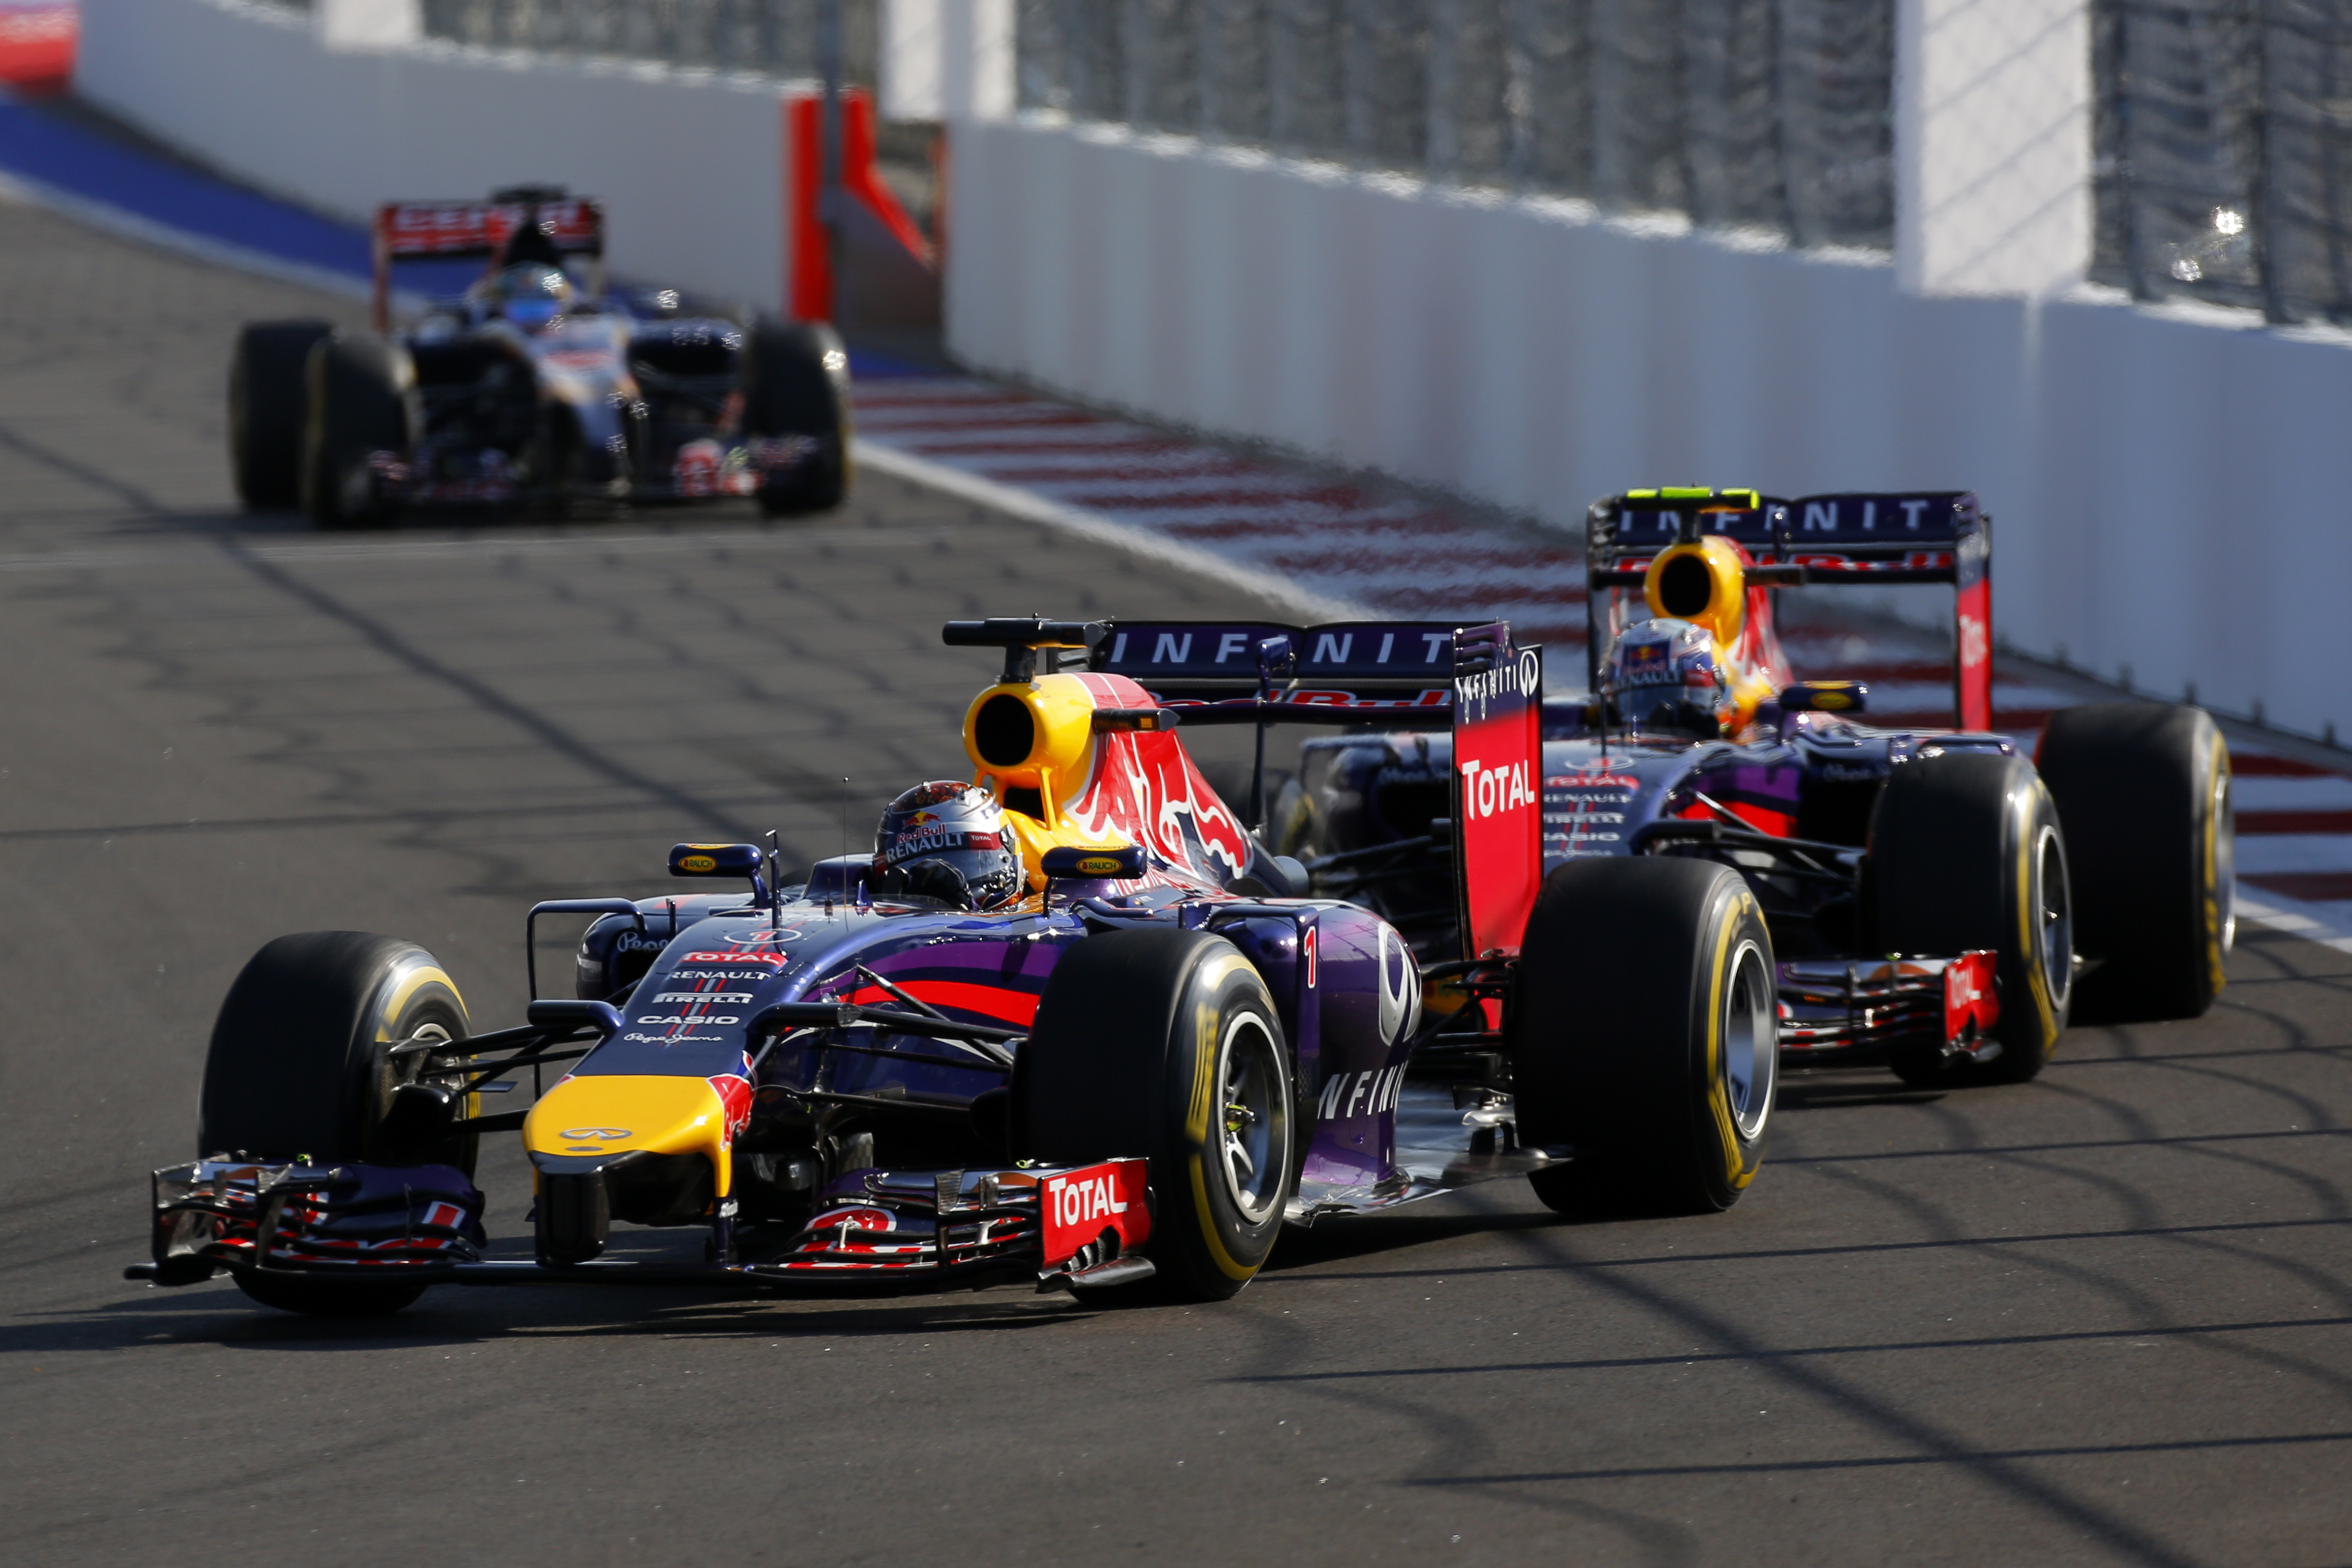 Horner: ‘Vettel óók weg vanwege Ricciardo’